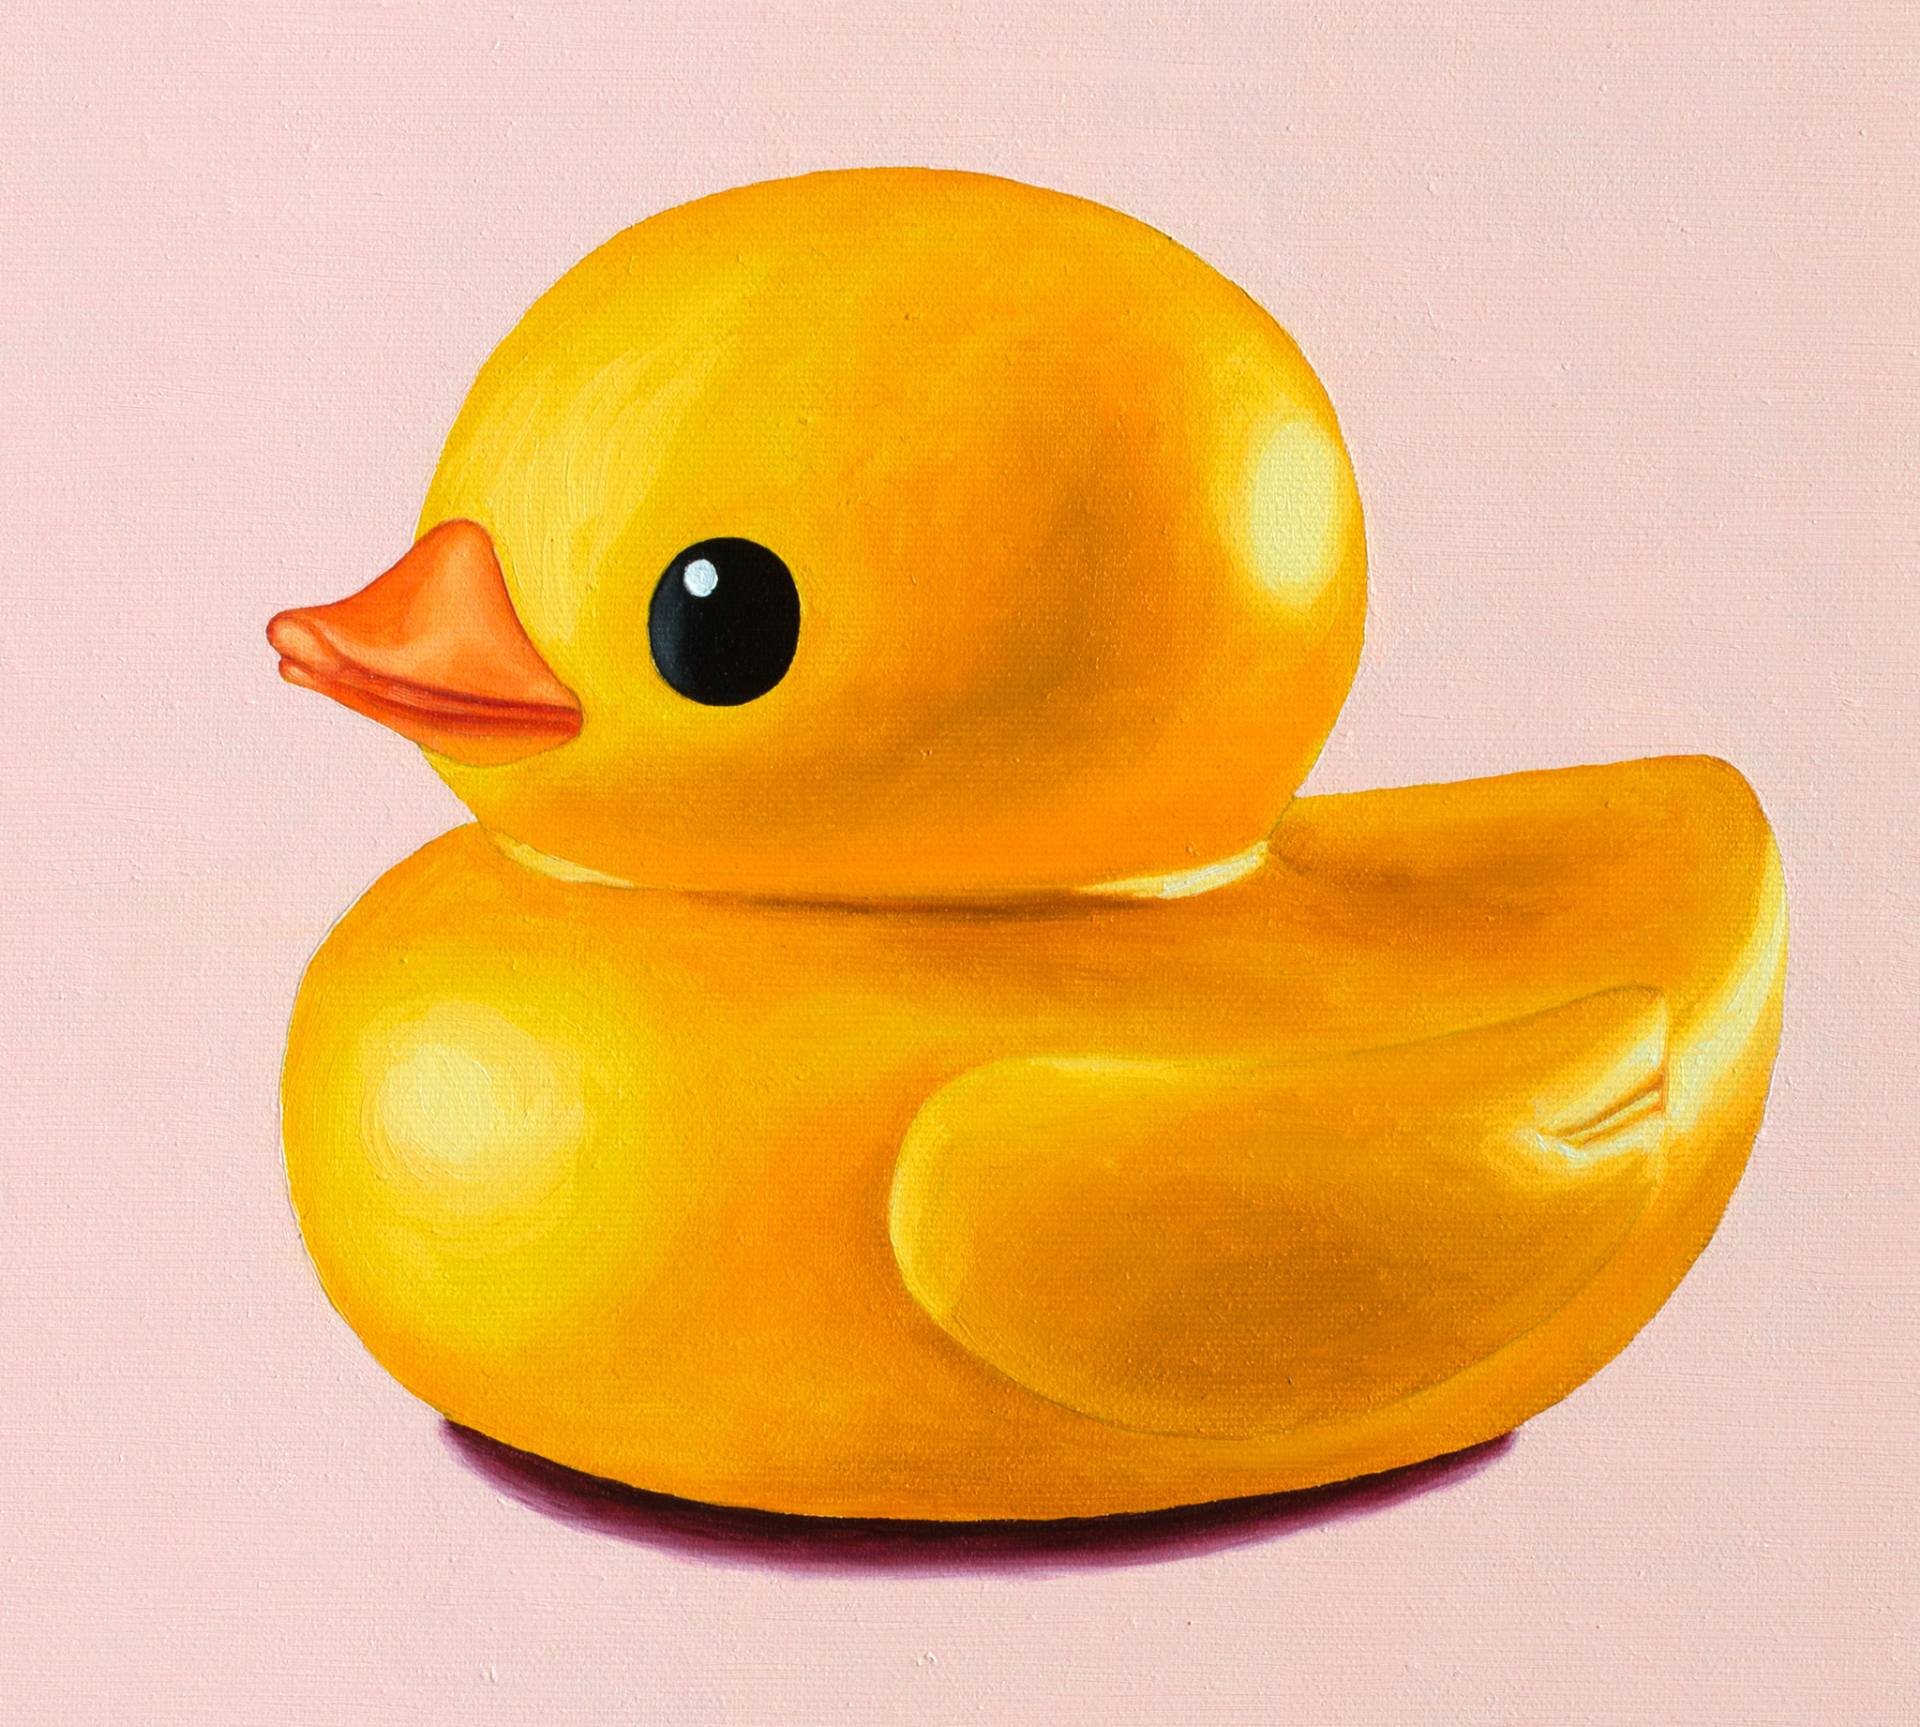 Saatchi Art: Rubber Duck Painting by Oleksandr Balbyshev